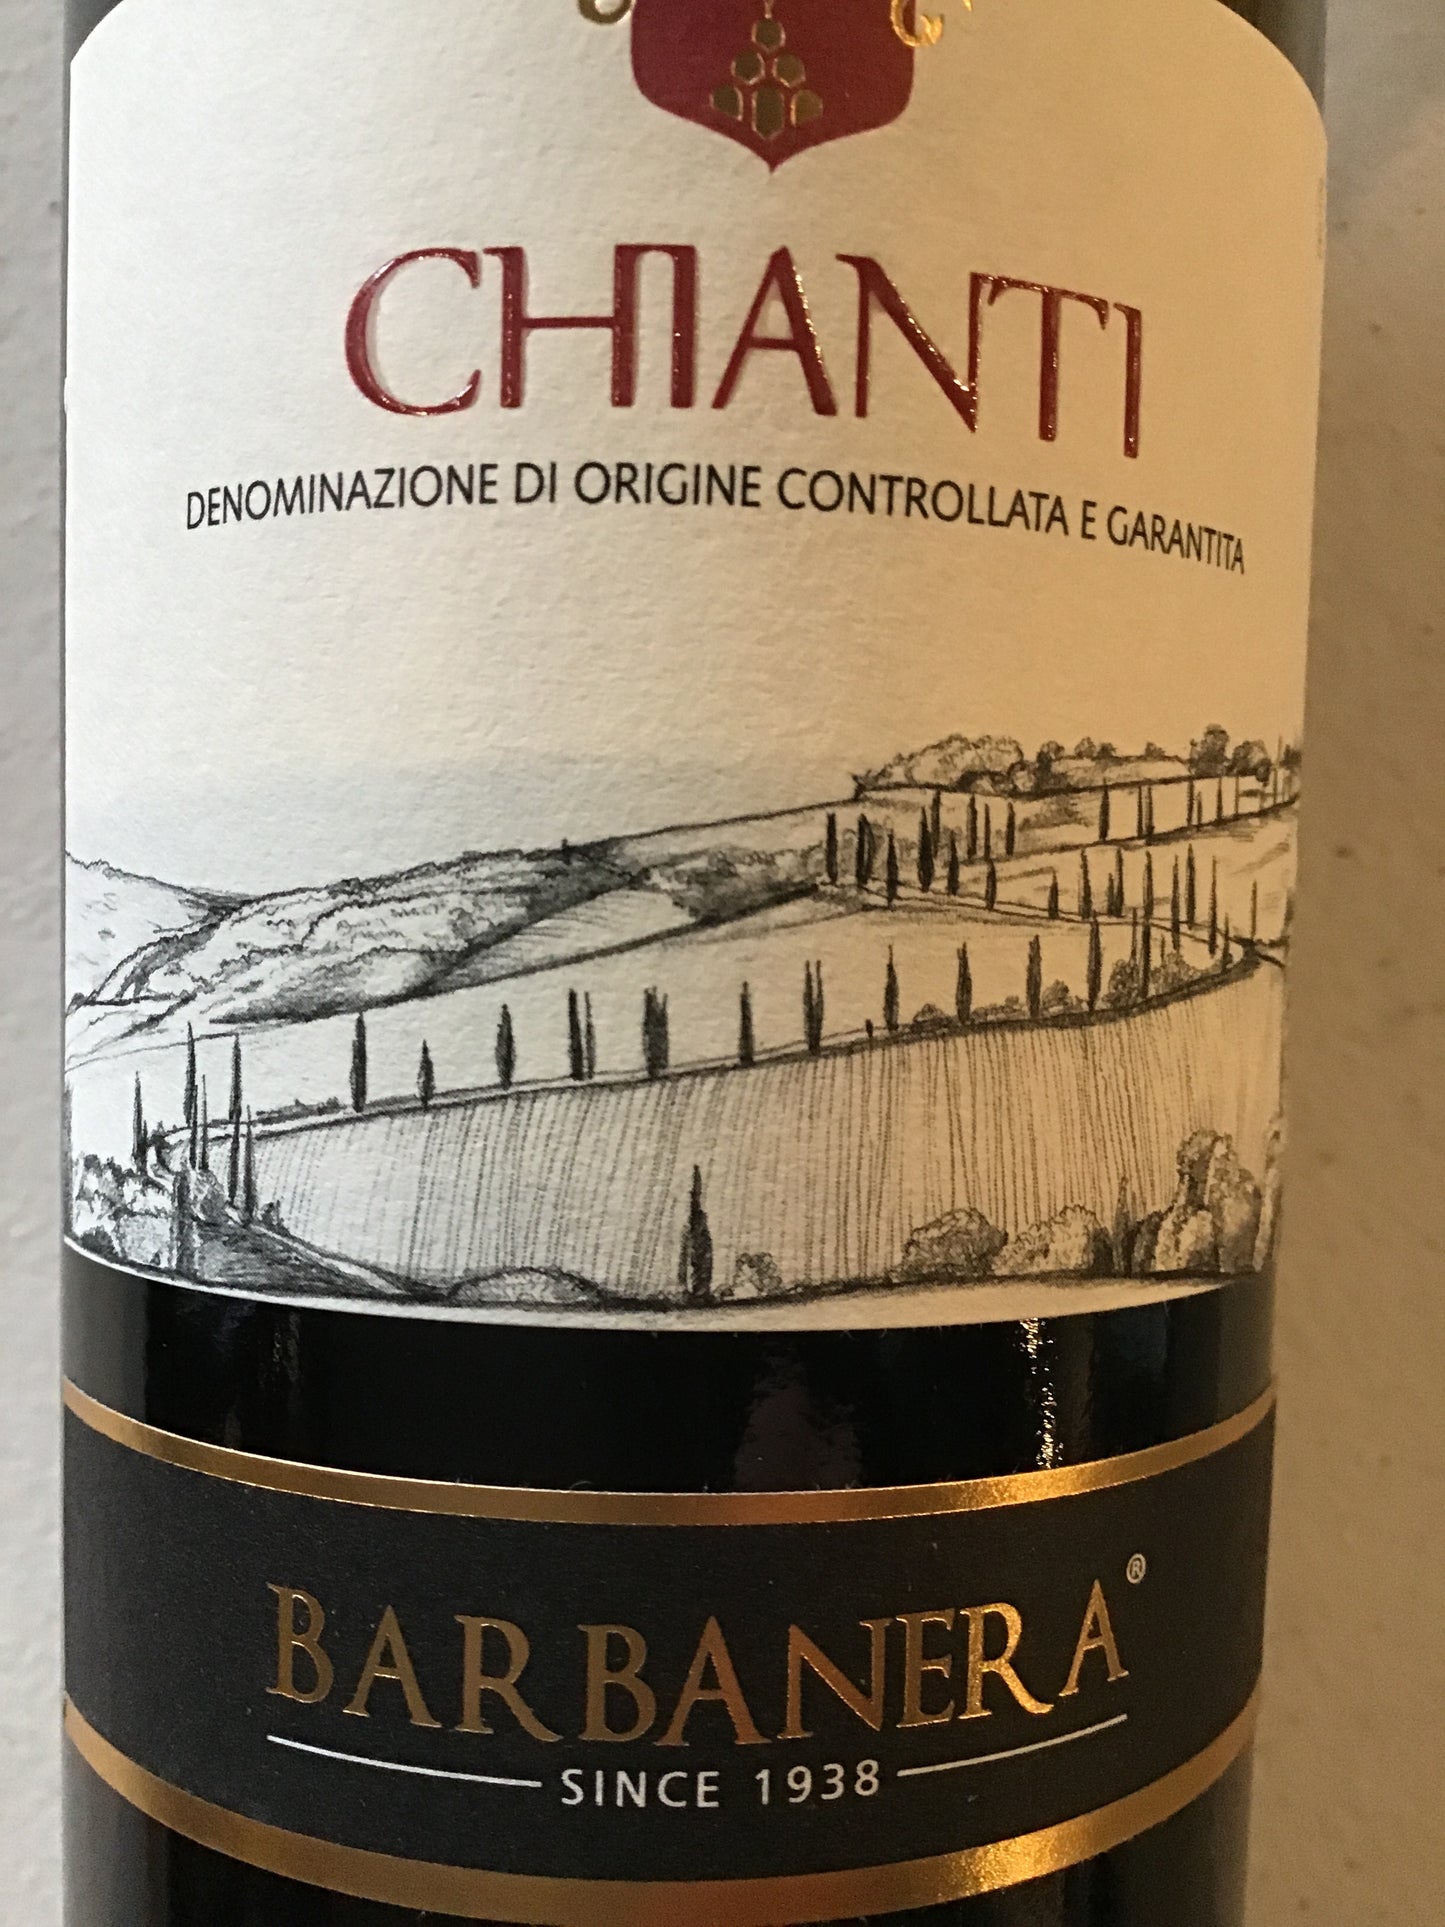 Barbanera - Chianti